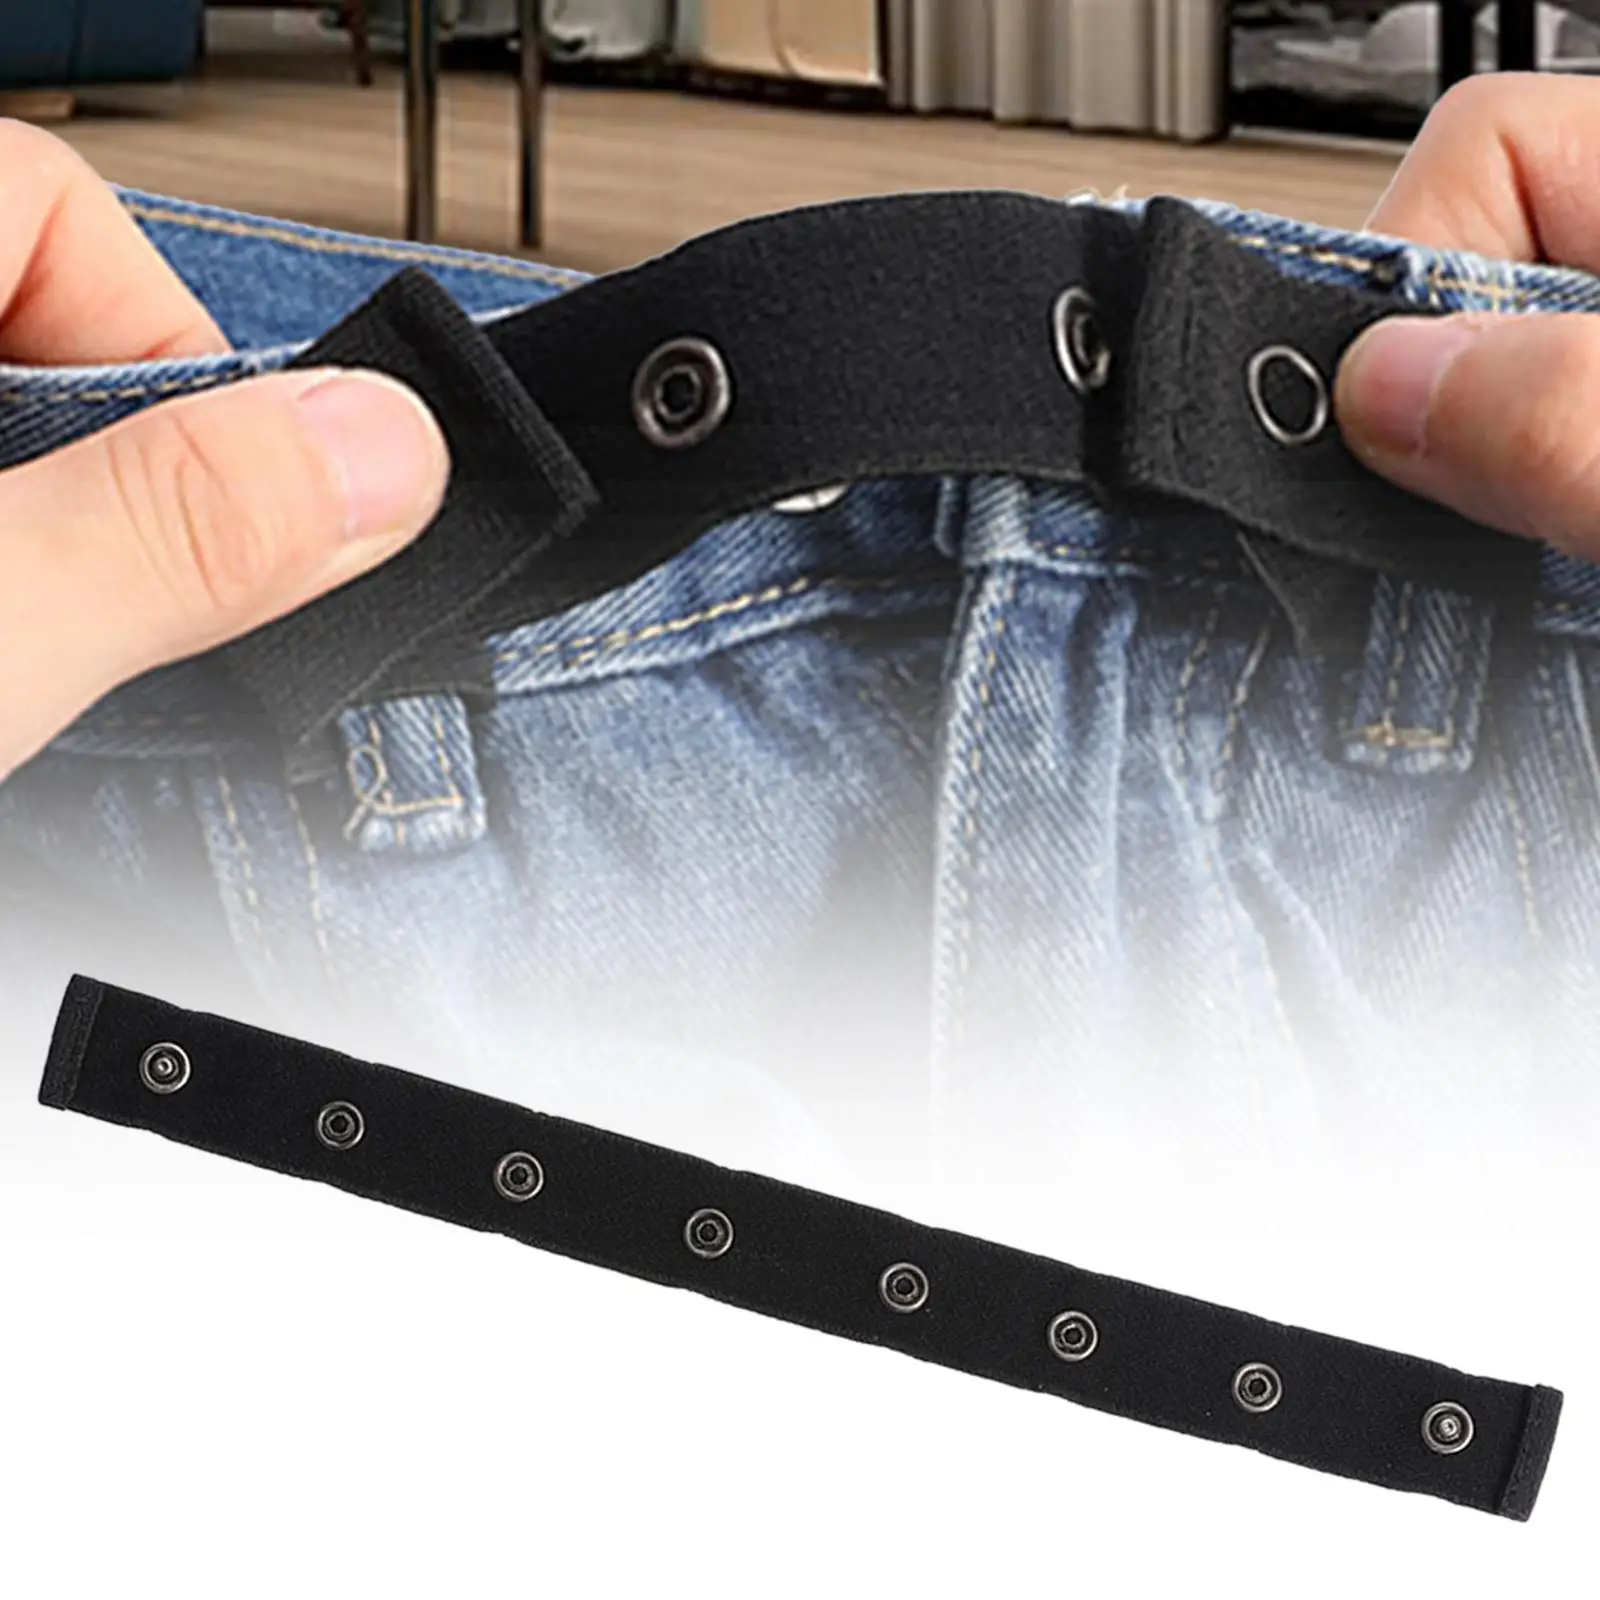 Elastic Belt No Buckle Unisex Stretch Invisible Belt Waist Belt Waistband Adjustable Without Buckle for Dress Jeans Pants